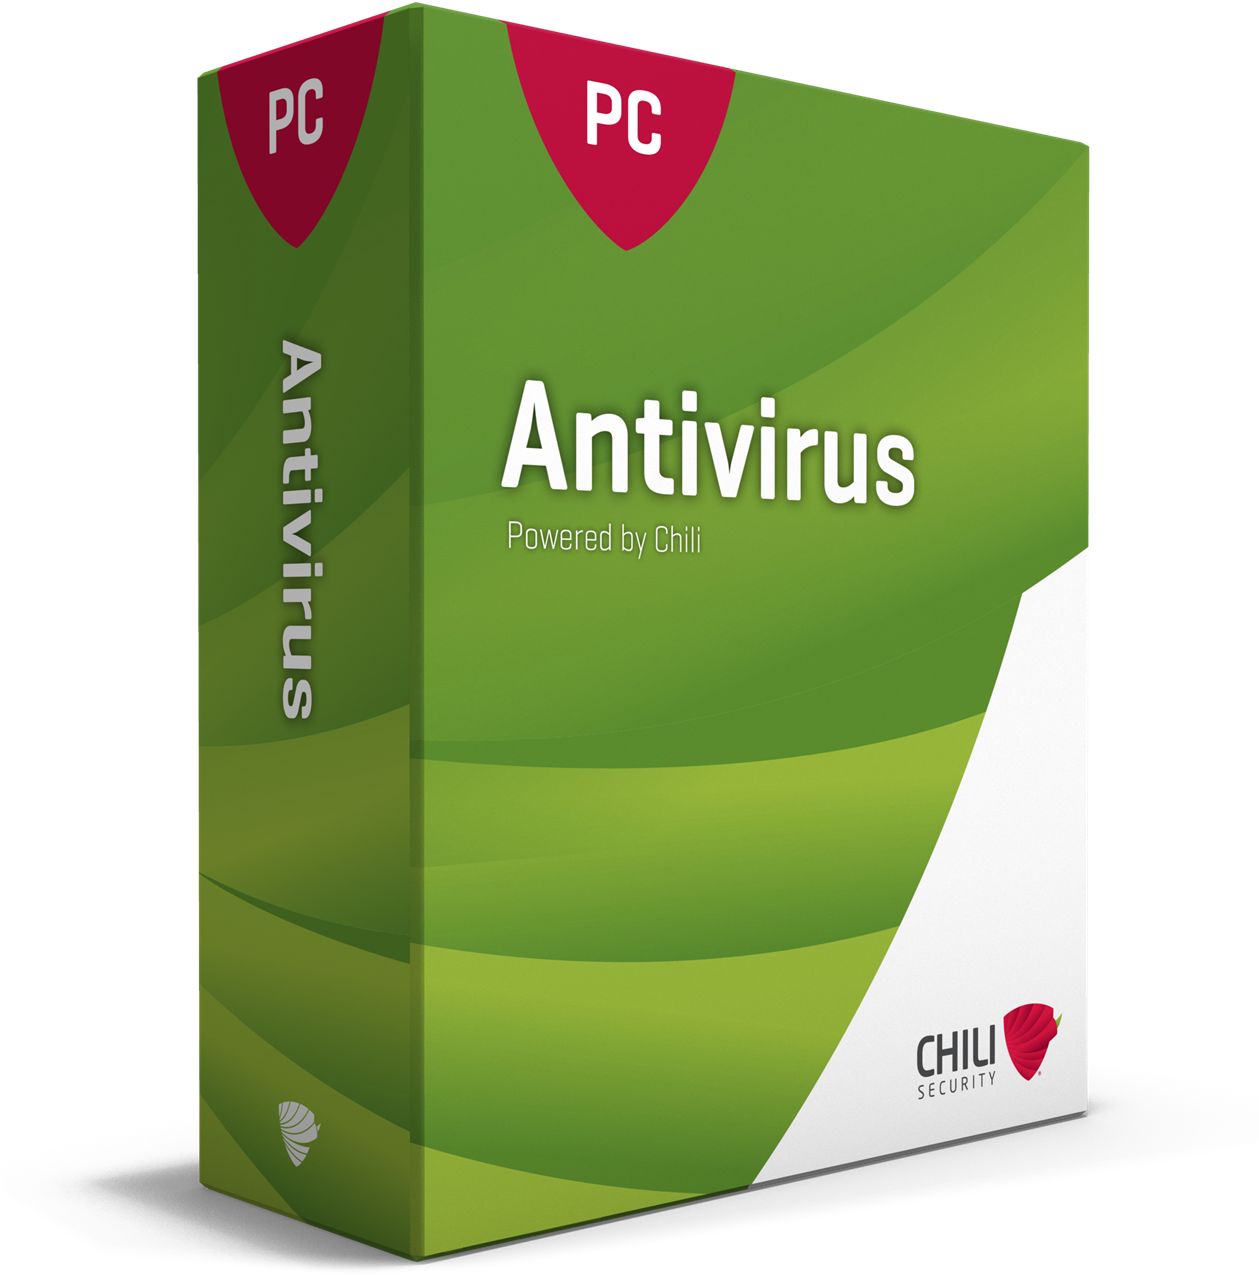 Антивирус фото. Антивирус. Антивирус картинки. Антивирус и антивирусные программы. Антивирусные программы для ПК.